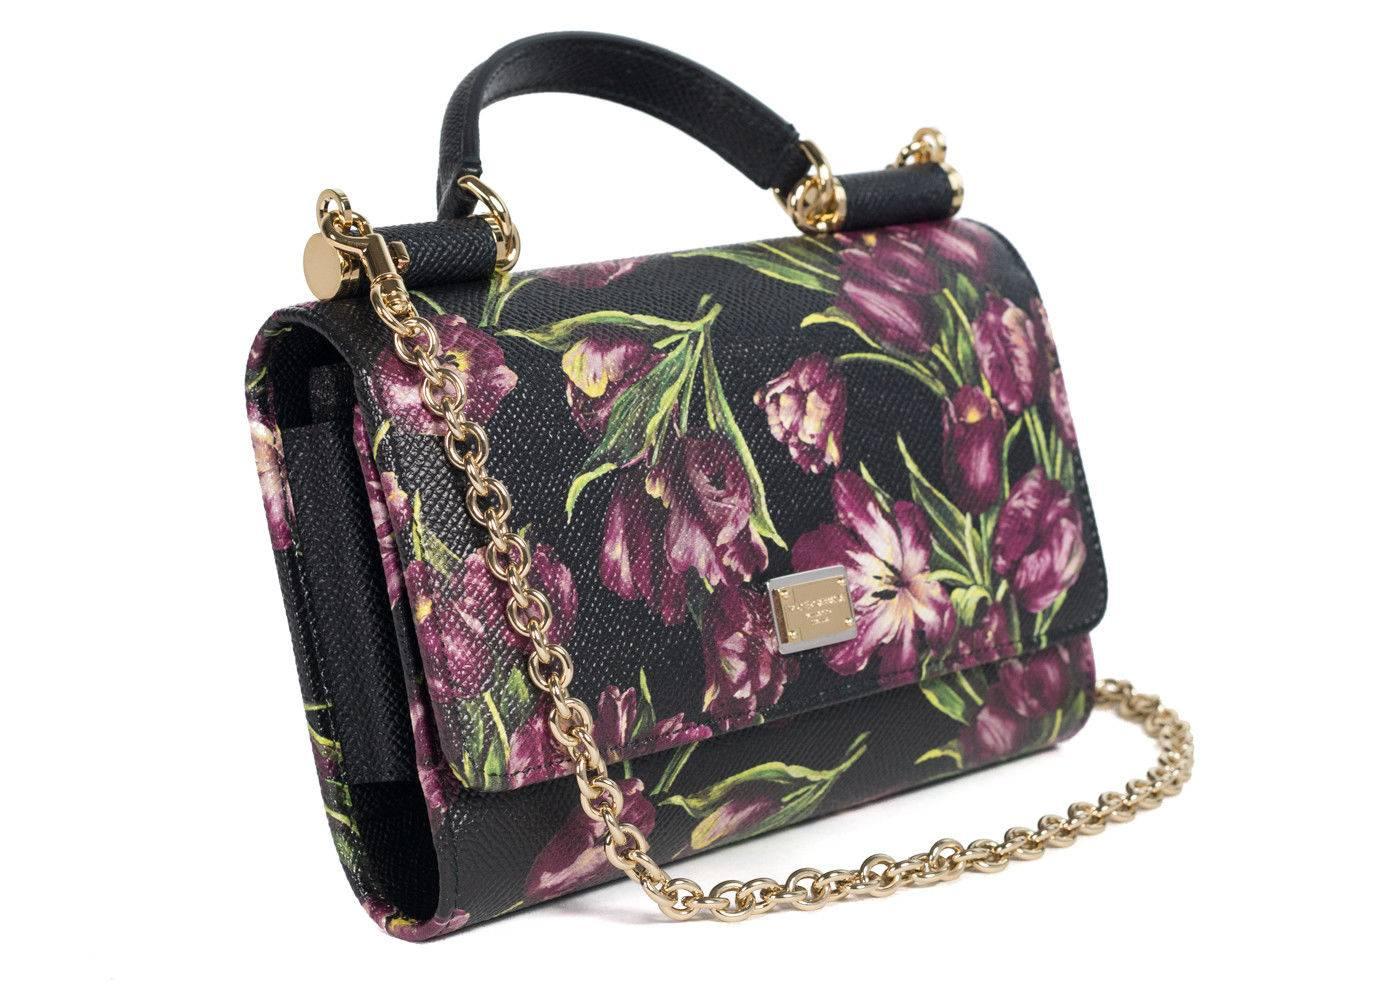 Brand New Dolce&Gabbana Shoulder Bag
Original Tags & Dust Bag Included
Retails in Stores & Online for $995
Dimensions: 5.9"L x 3.9"H x 2"D

Dolce & Gabbana's Von wallet shoulder bag in a purple floral printed pattern.